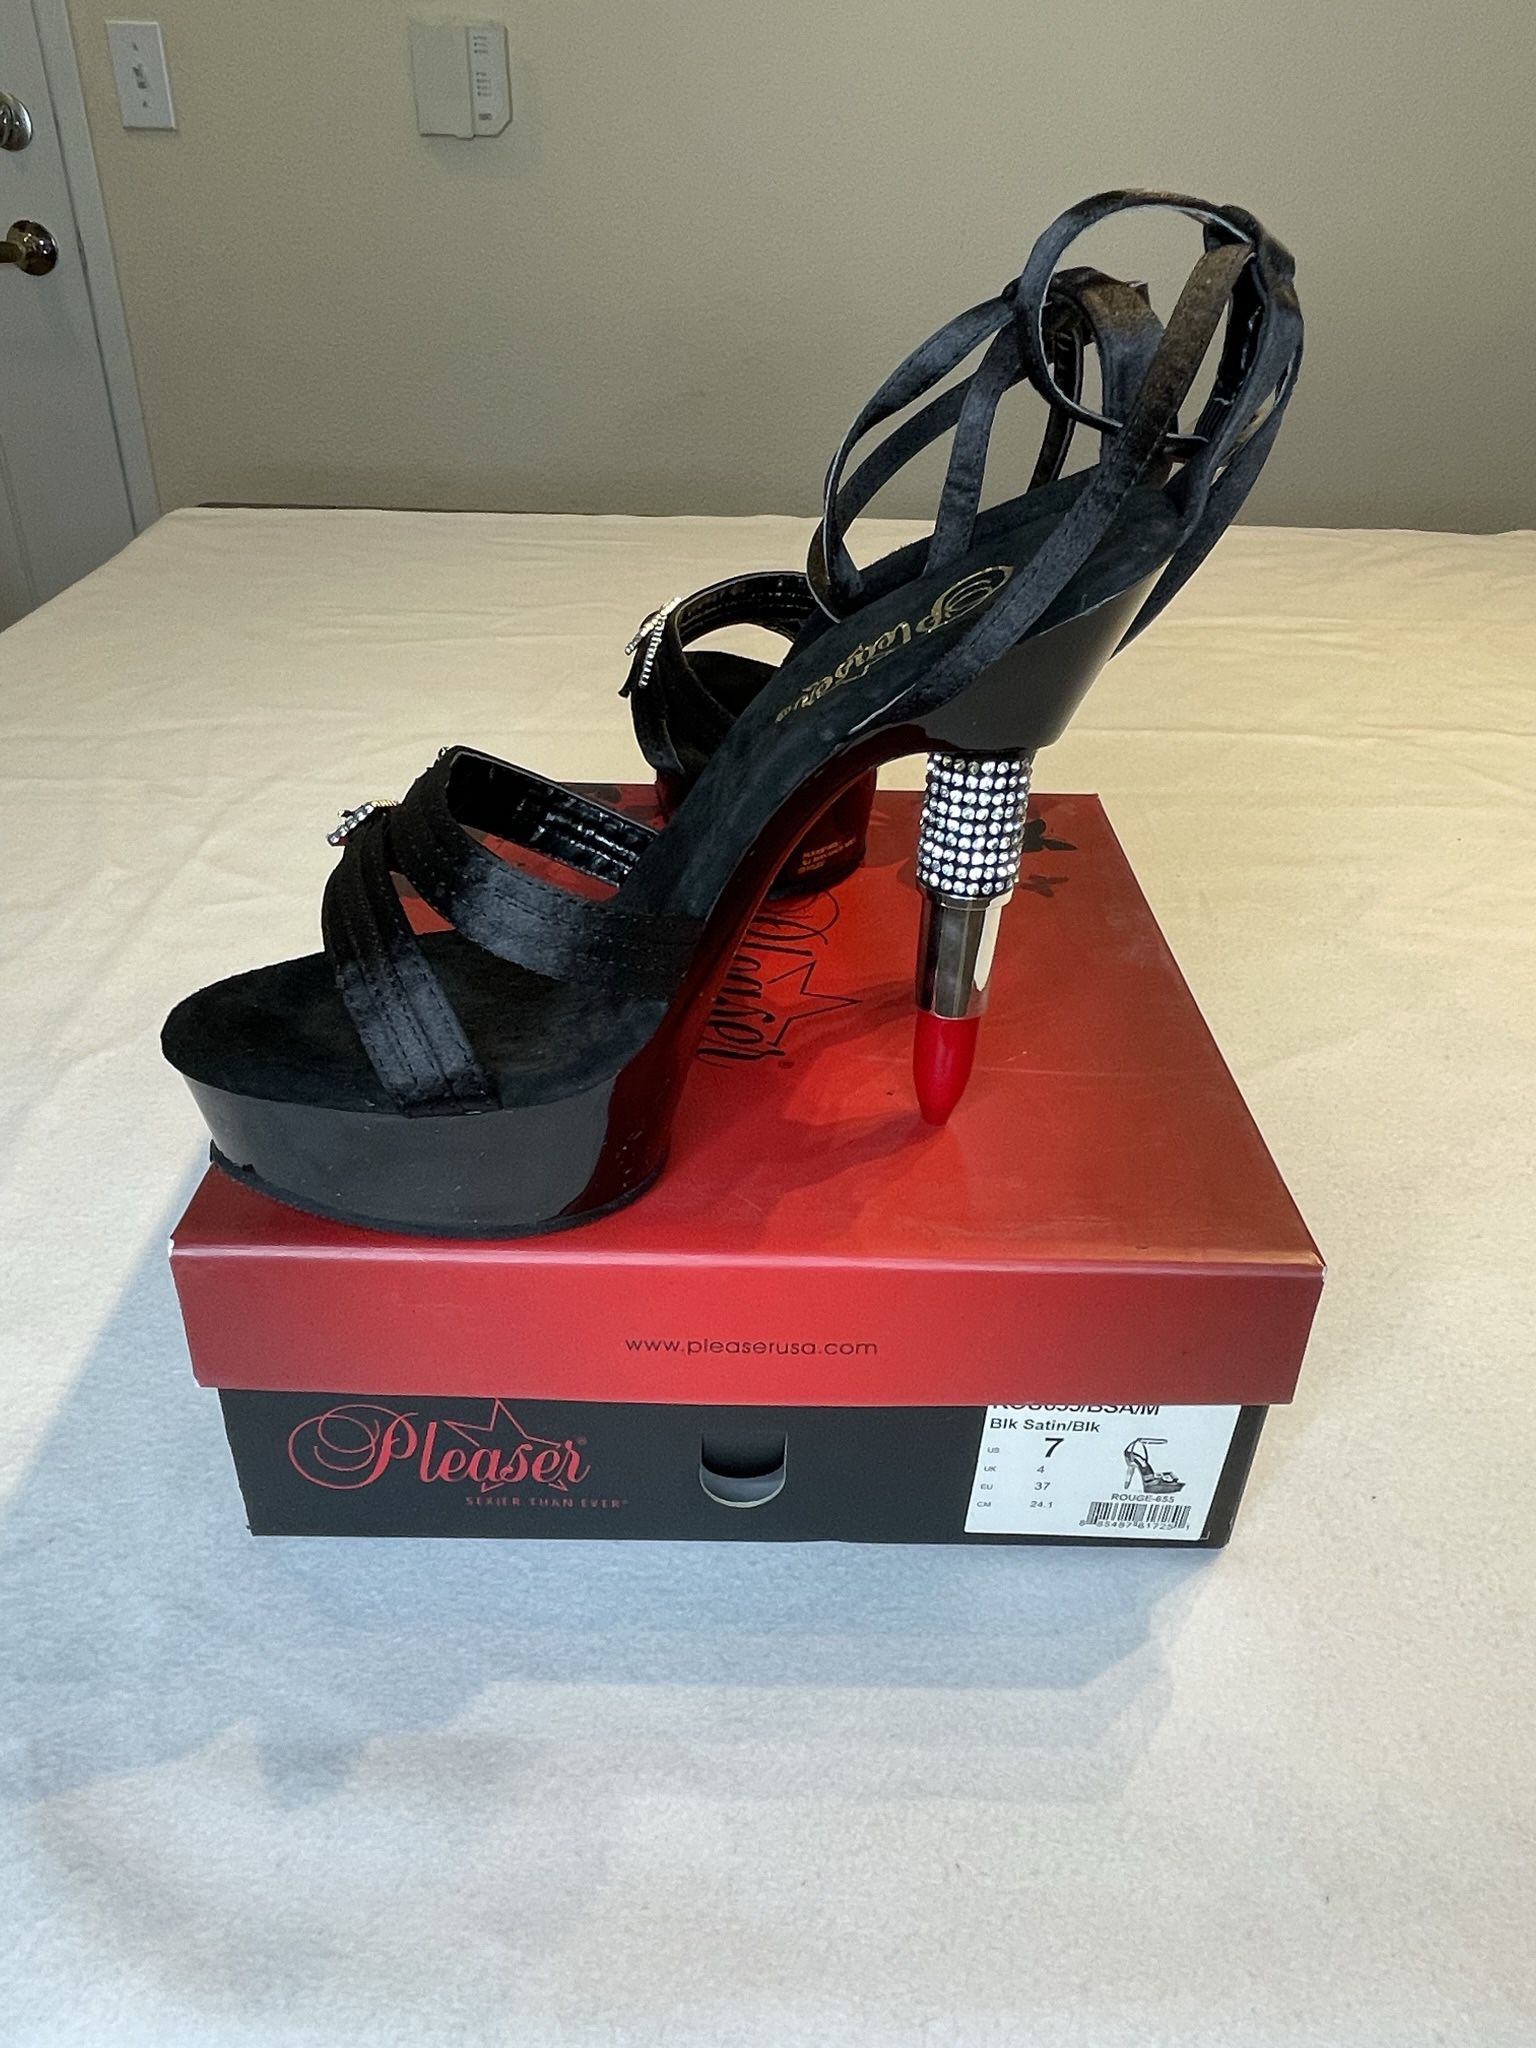 LV high heels Size 6 for Sale in Bellevue, WA - OfferUp